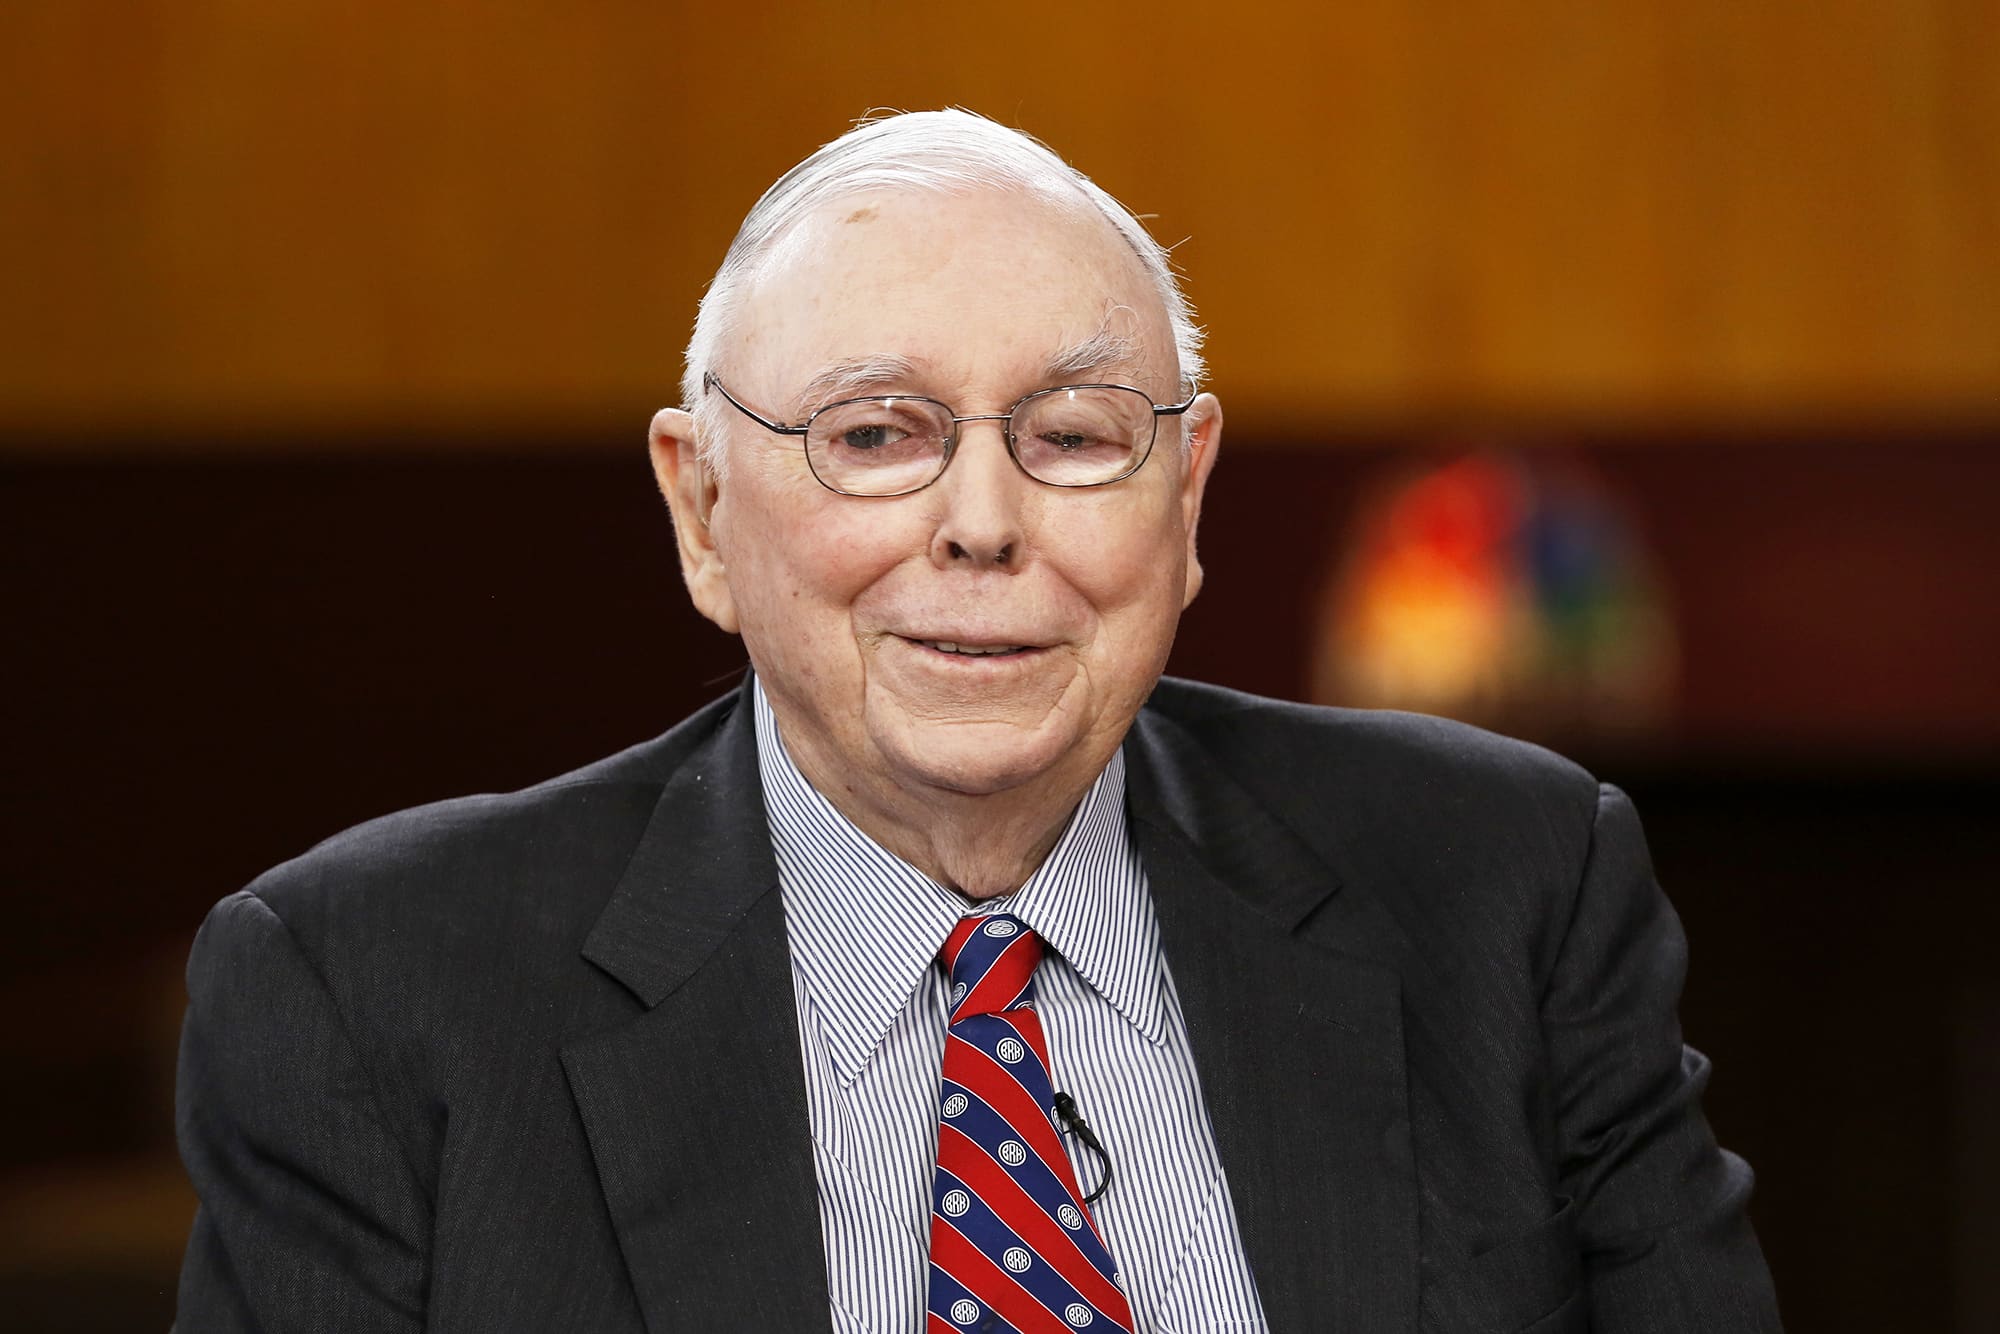 Charlie Munger, investment sage and close friend of Warren Buffett, has died